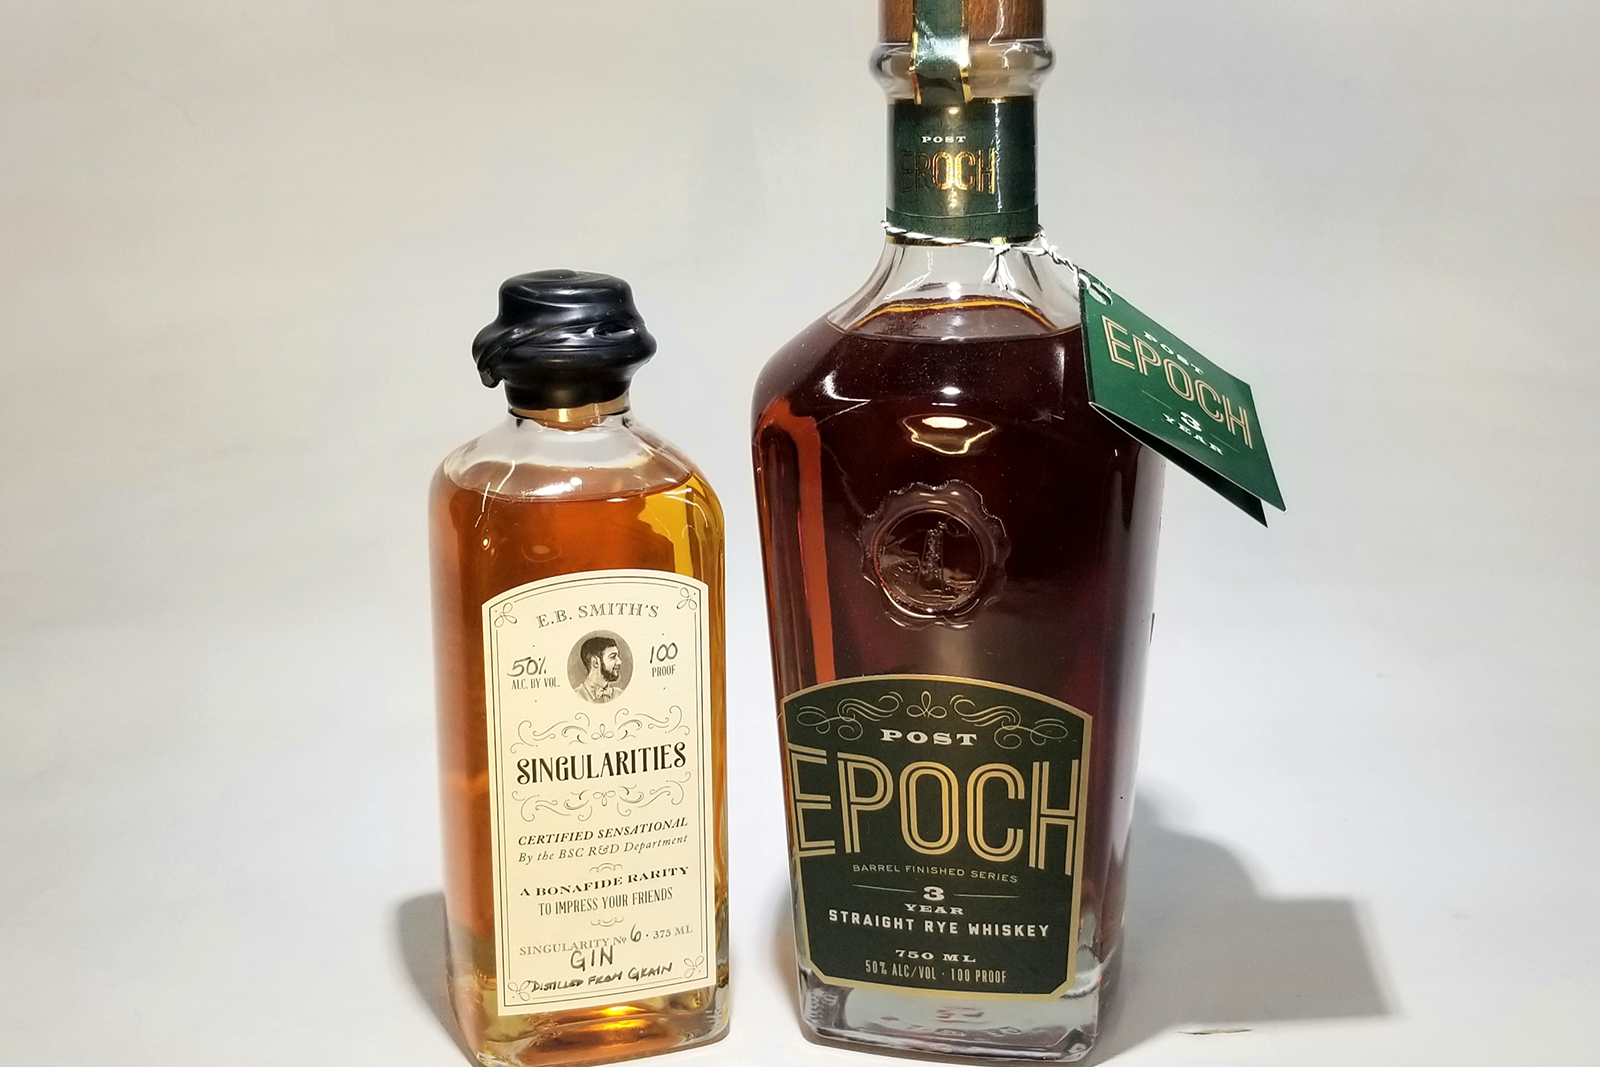 Post Epoch Whiskey, Singularities Gin